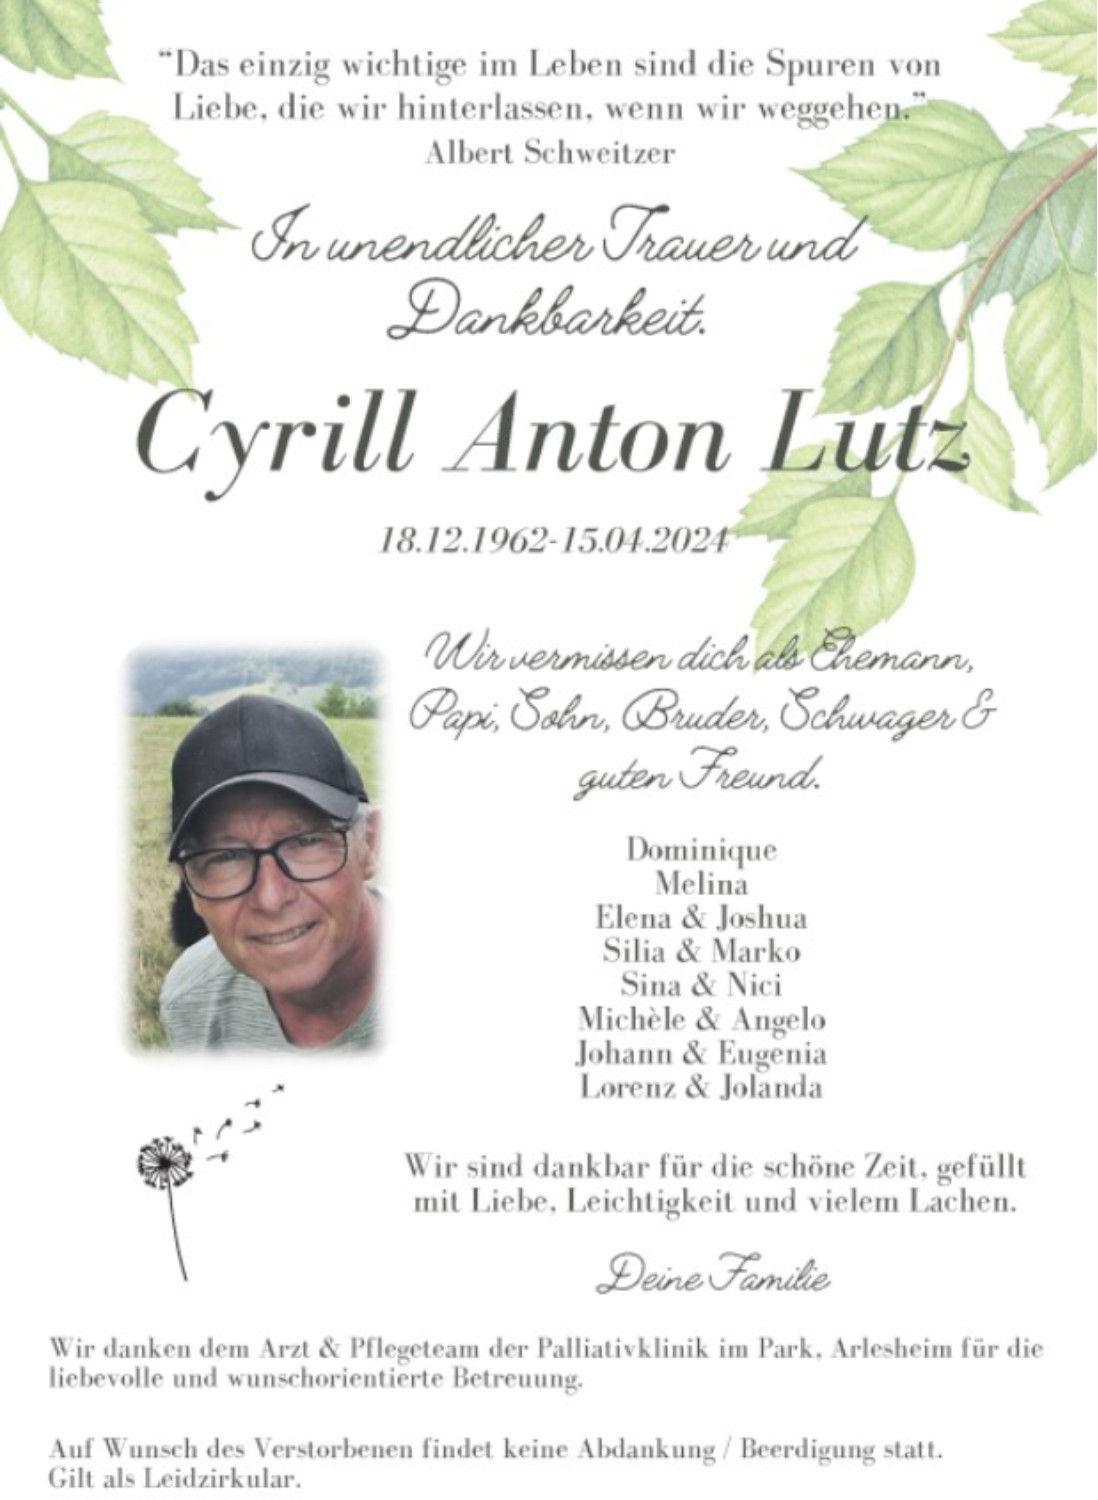 Cyrill Anton Lutz